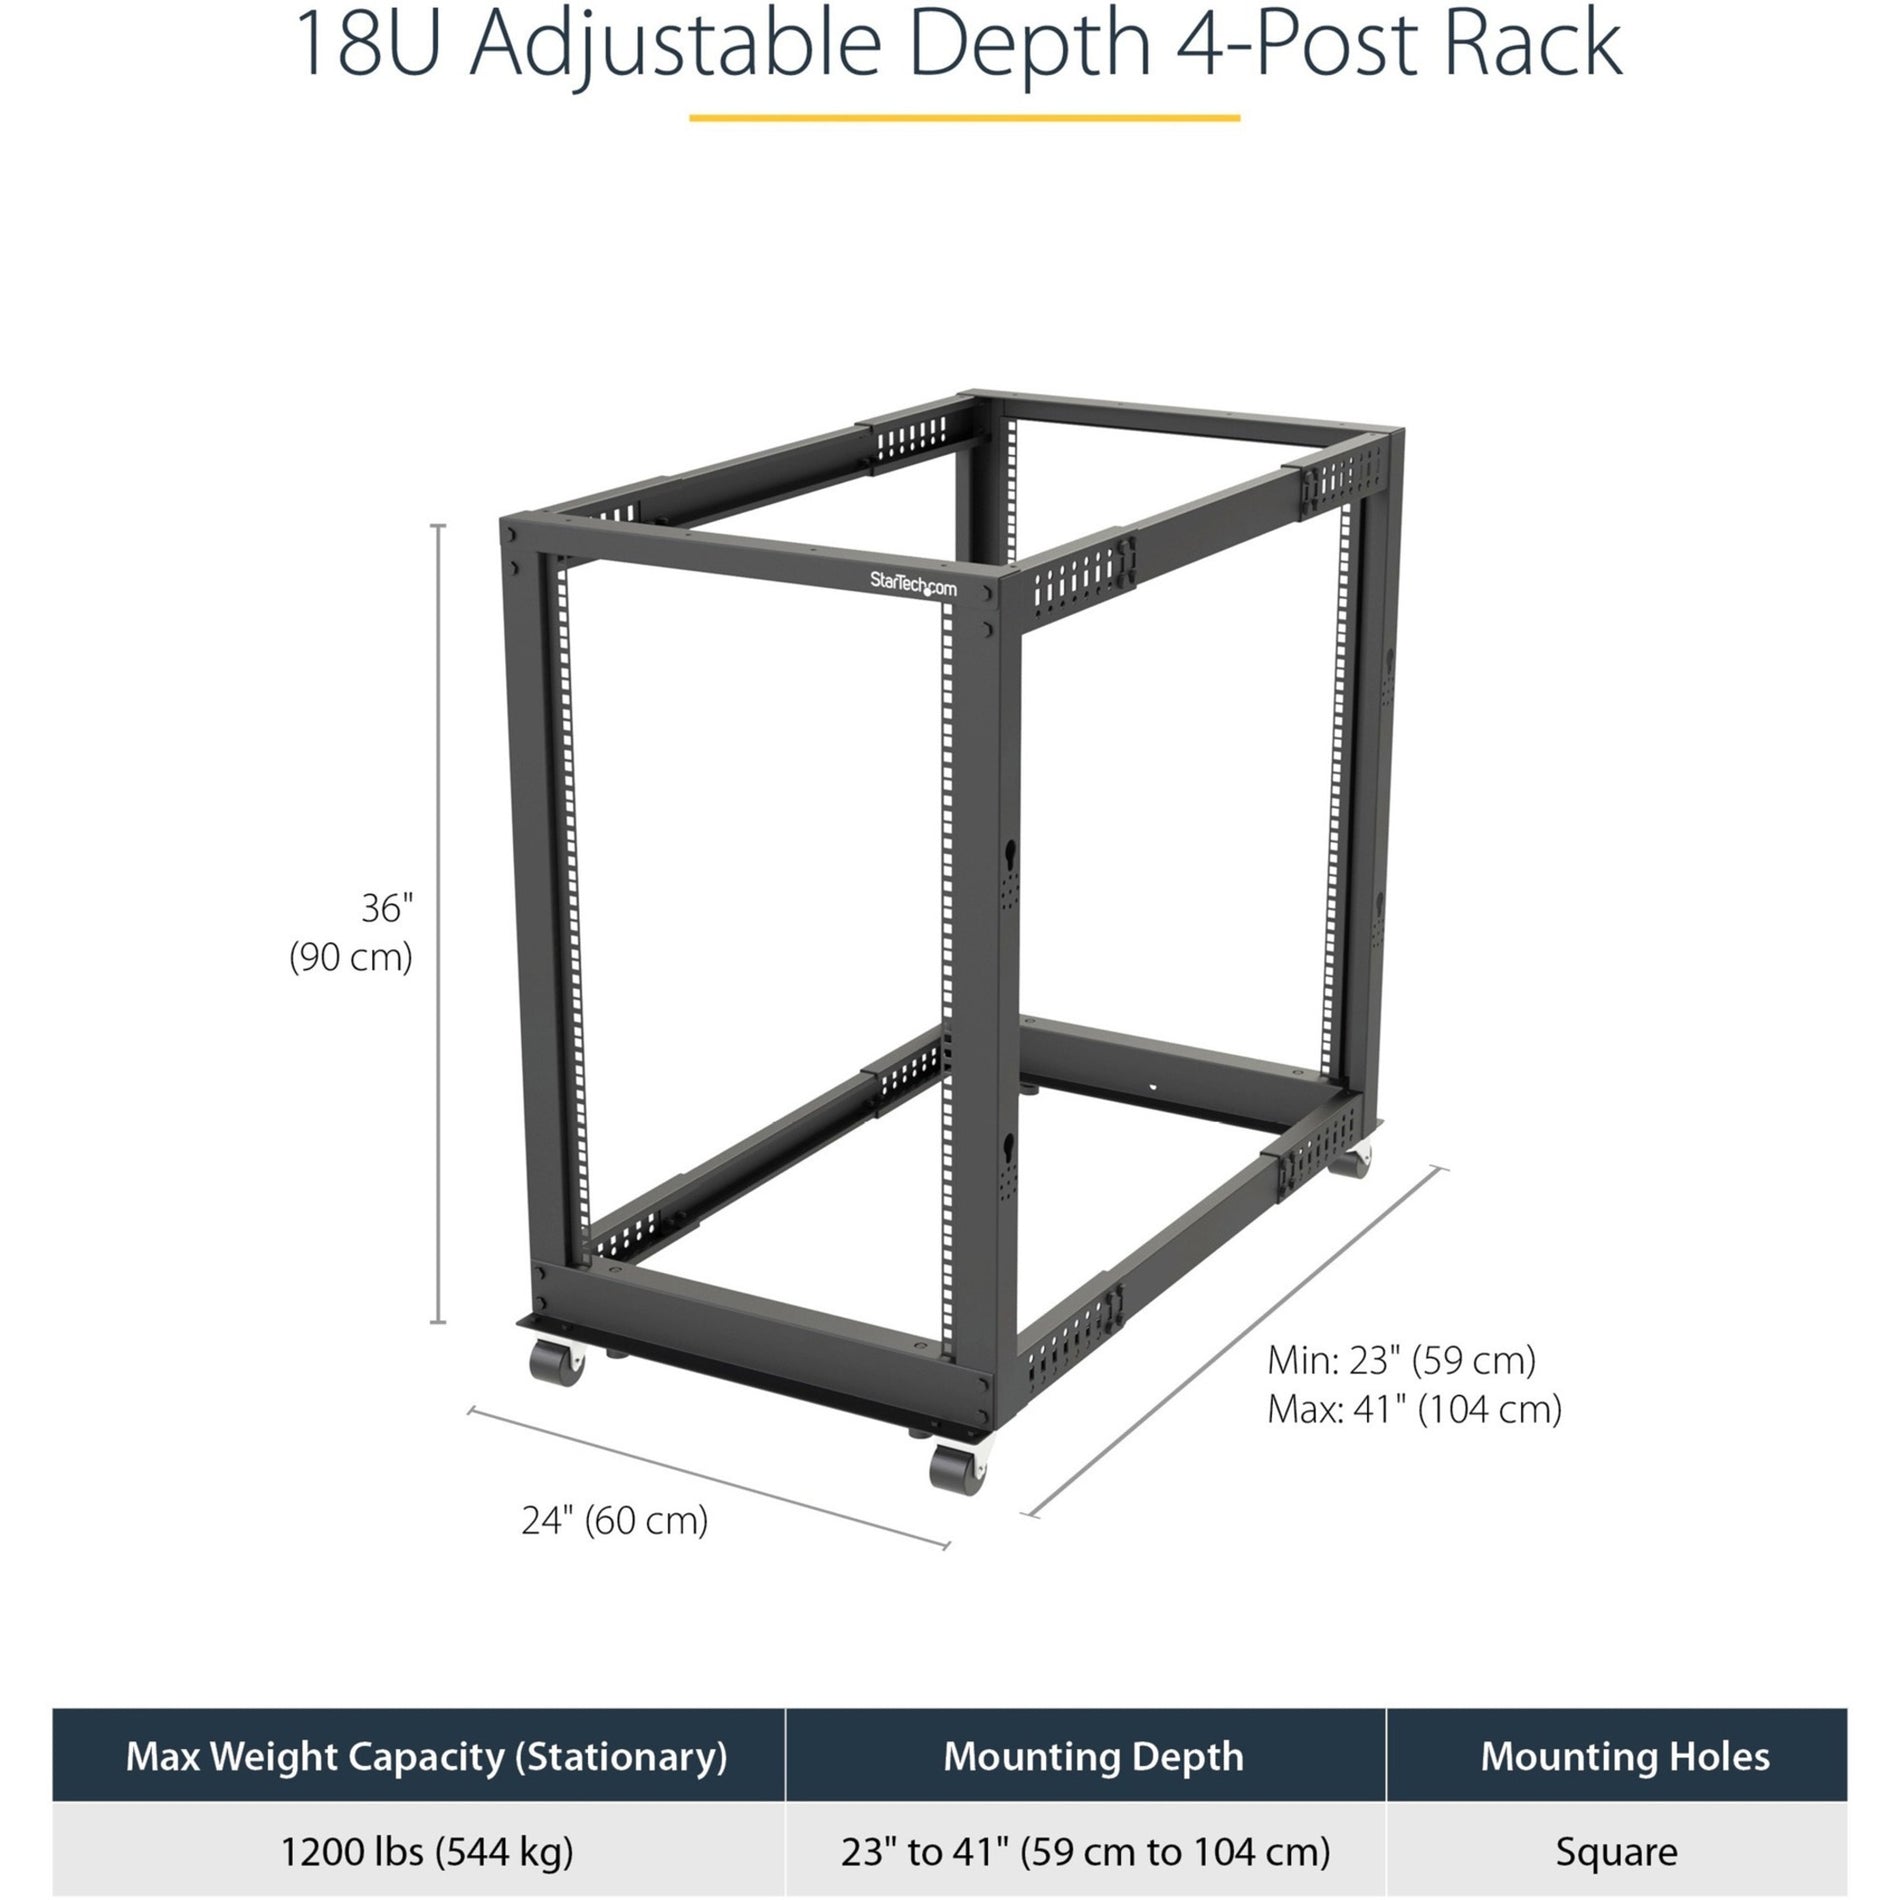 StarTech.com 4POSTRACK18U 18U Open Frame Rack - Adjustable Depth, 1200 lb. Weight Capacity, Includes Casters